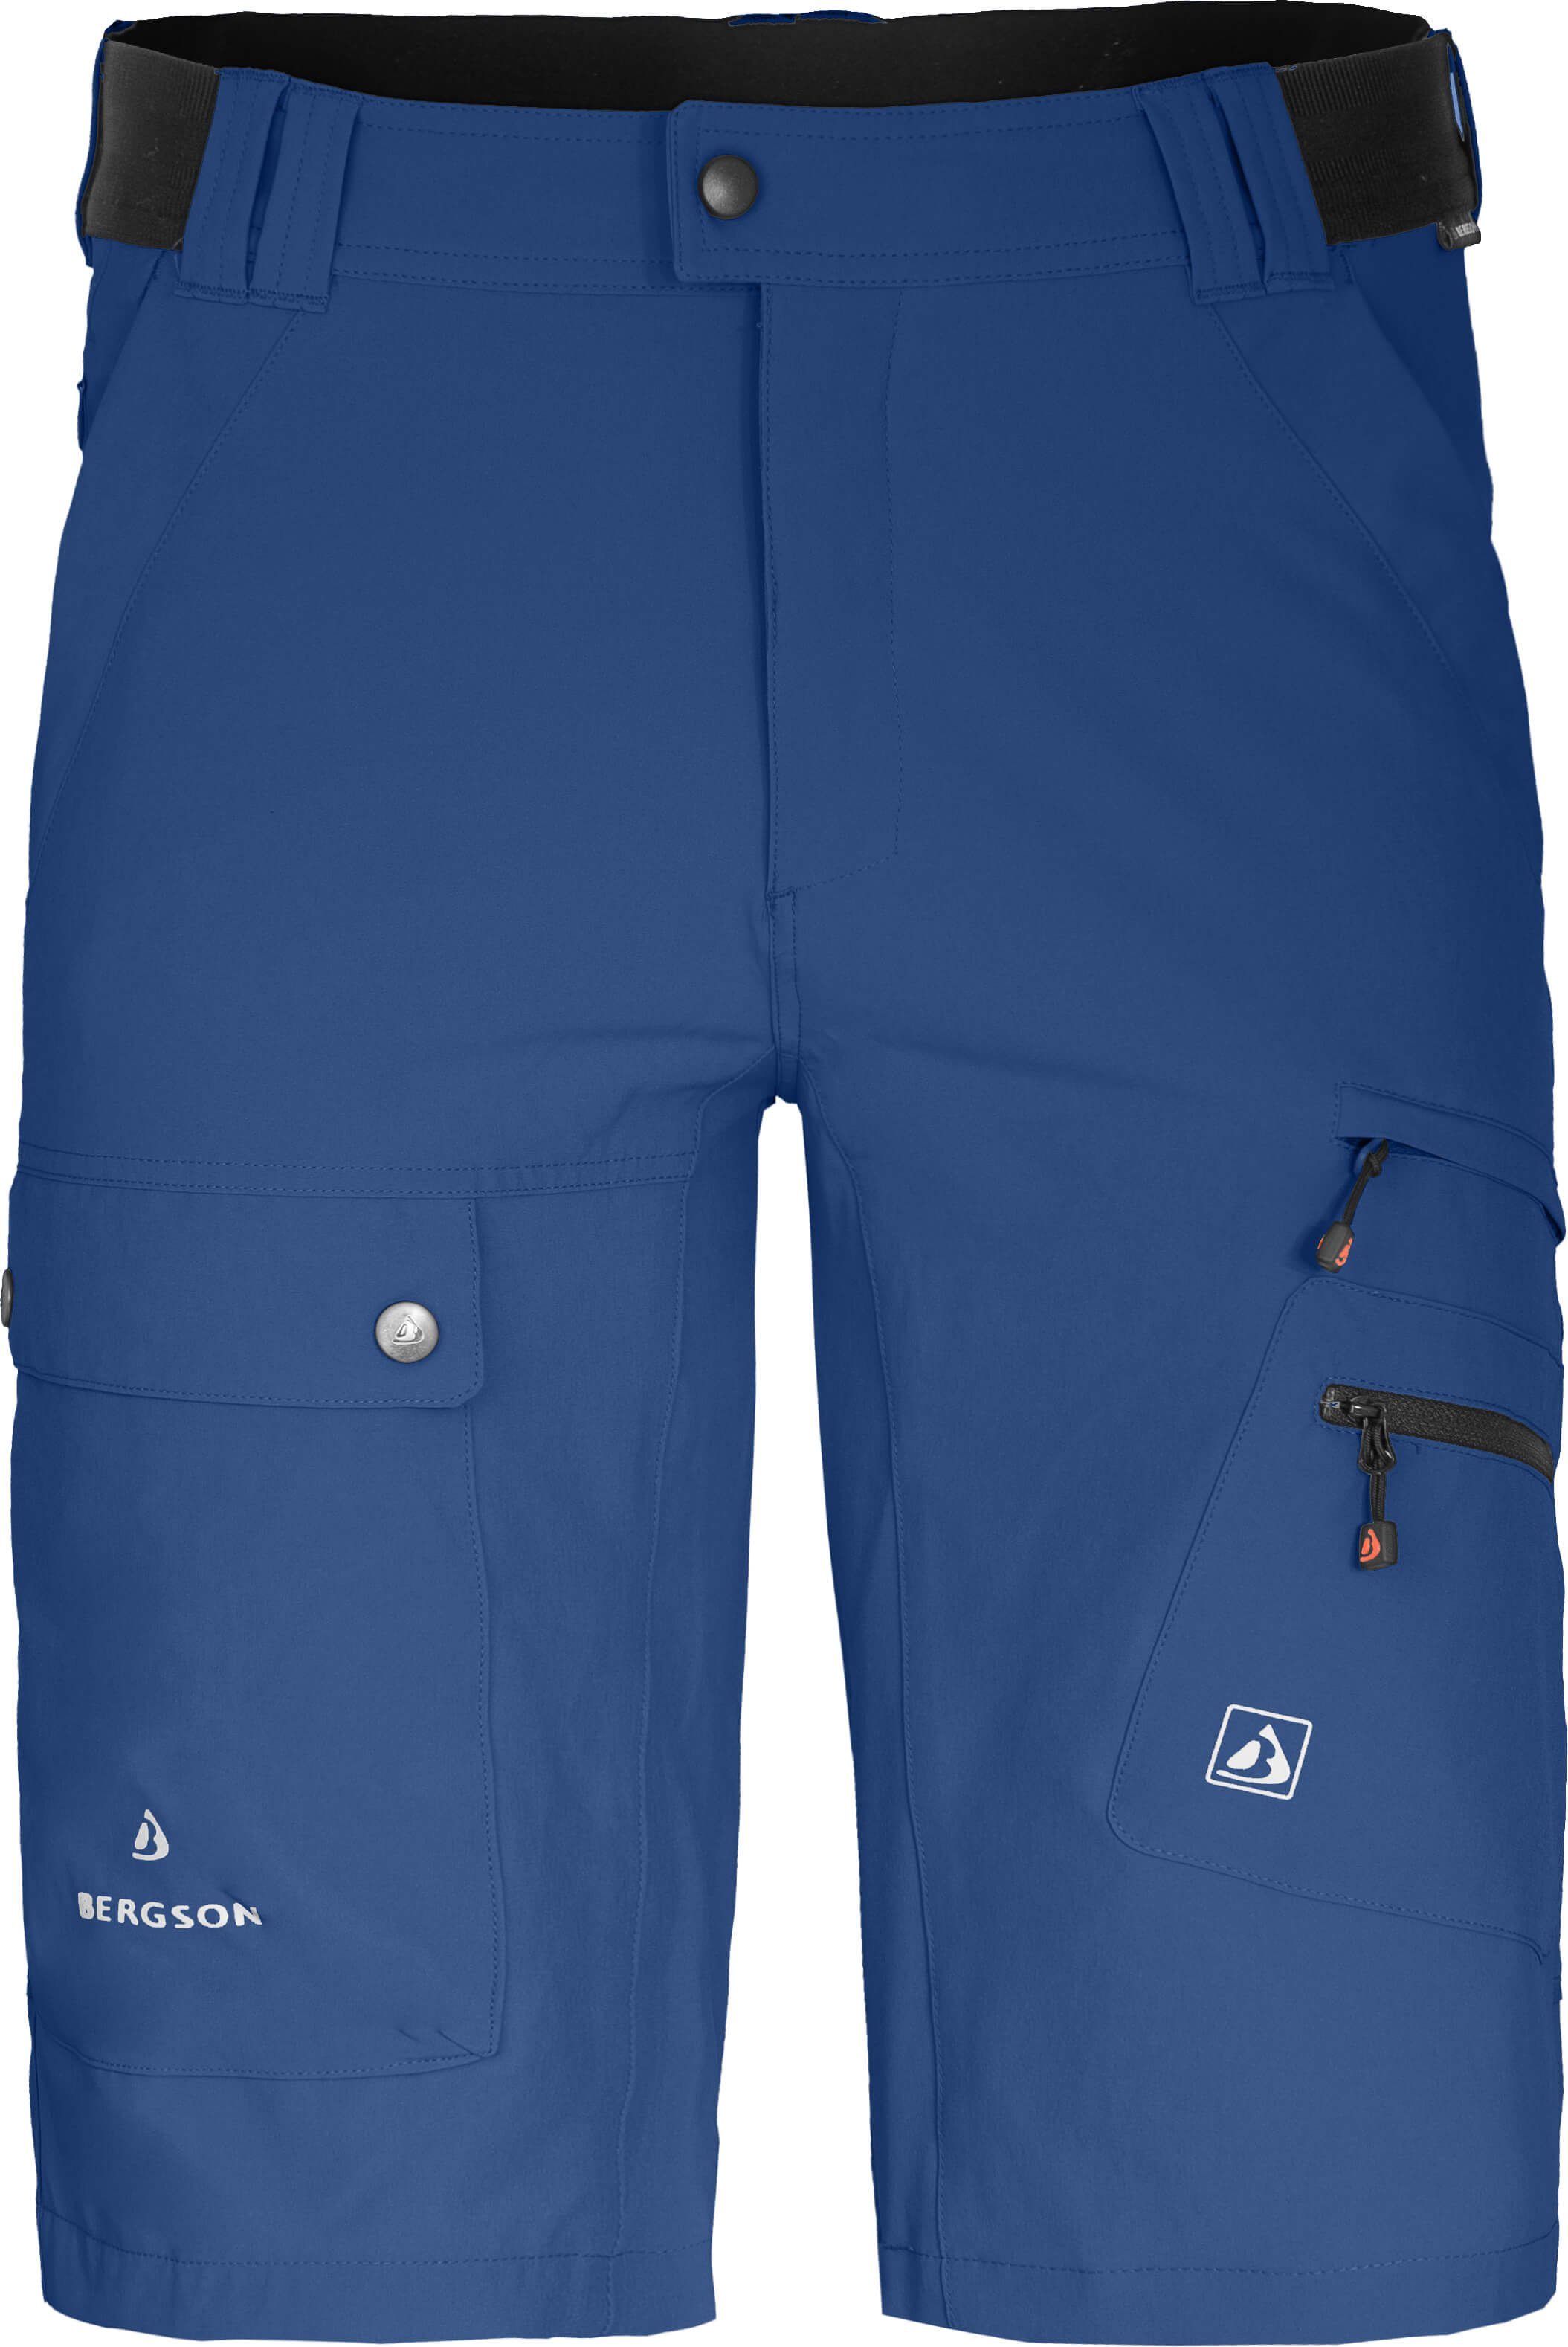 Bergson Outdoorhose FROSLEV COMFORT Bermuda Herren Wandershorts, recycelt, elastisch, 8 Taschen, Normalgrößen, blau | Outdoorhosen